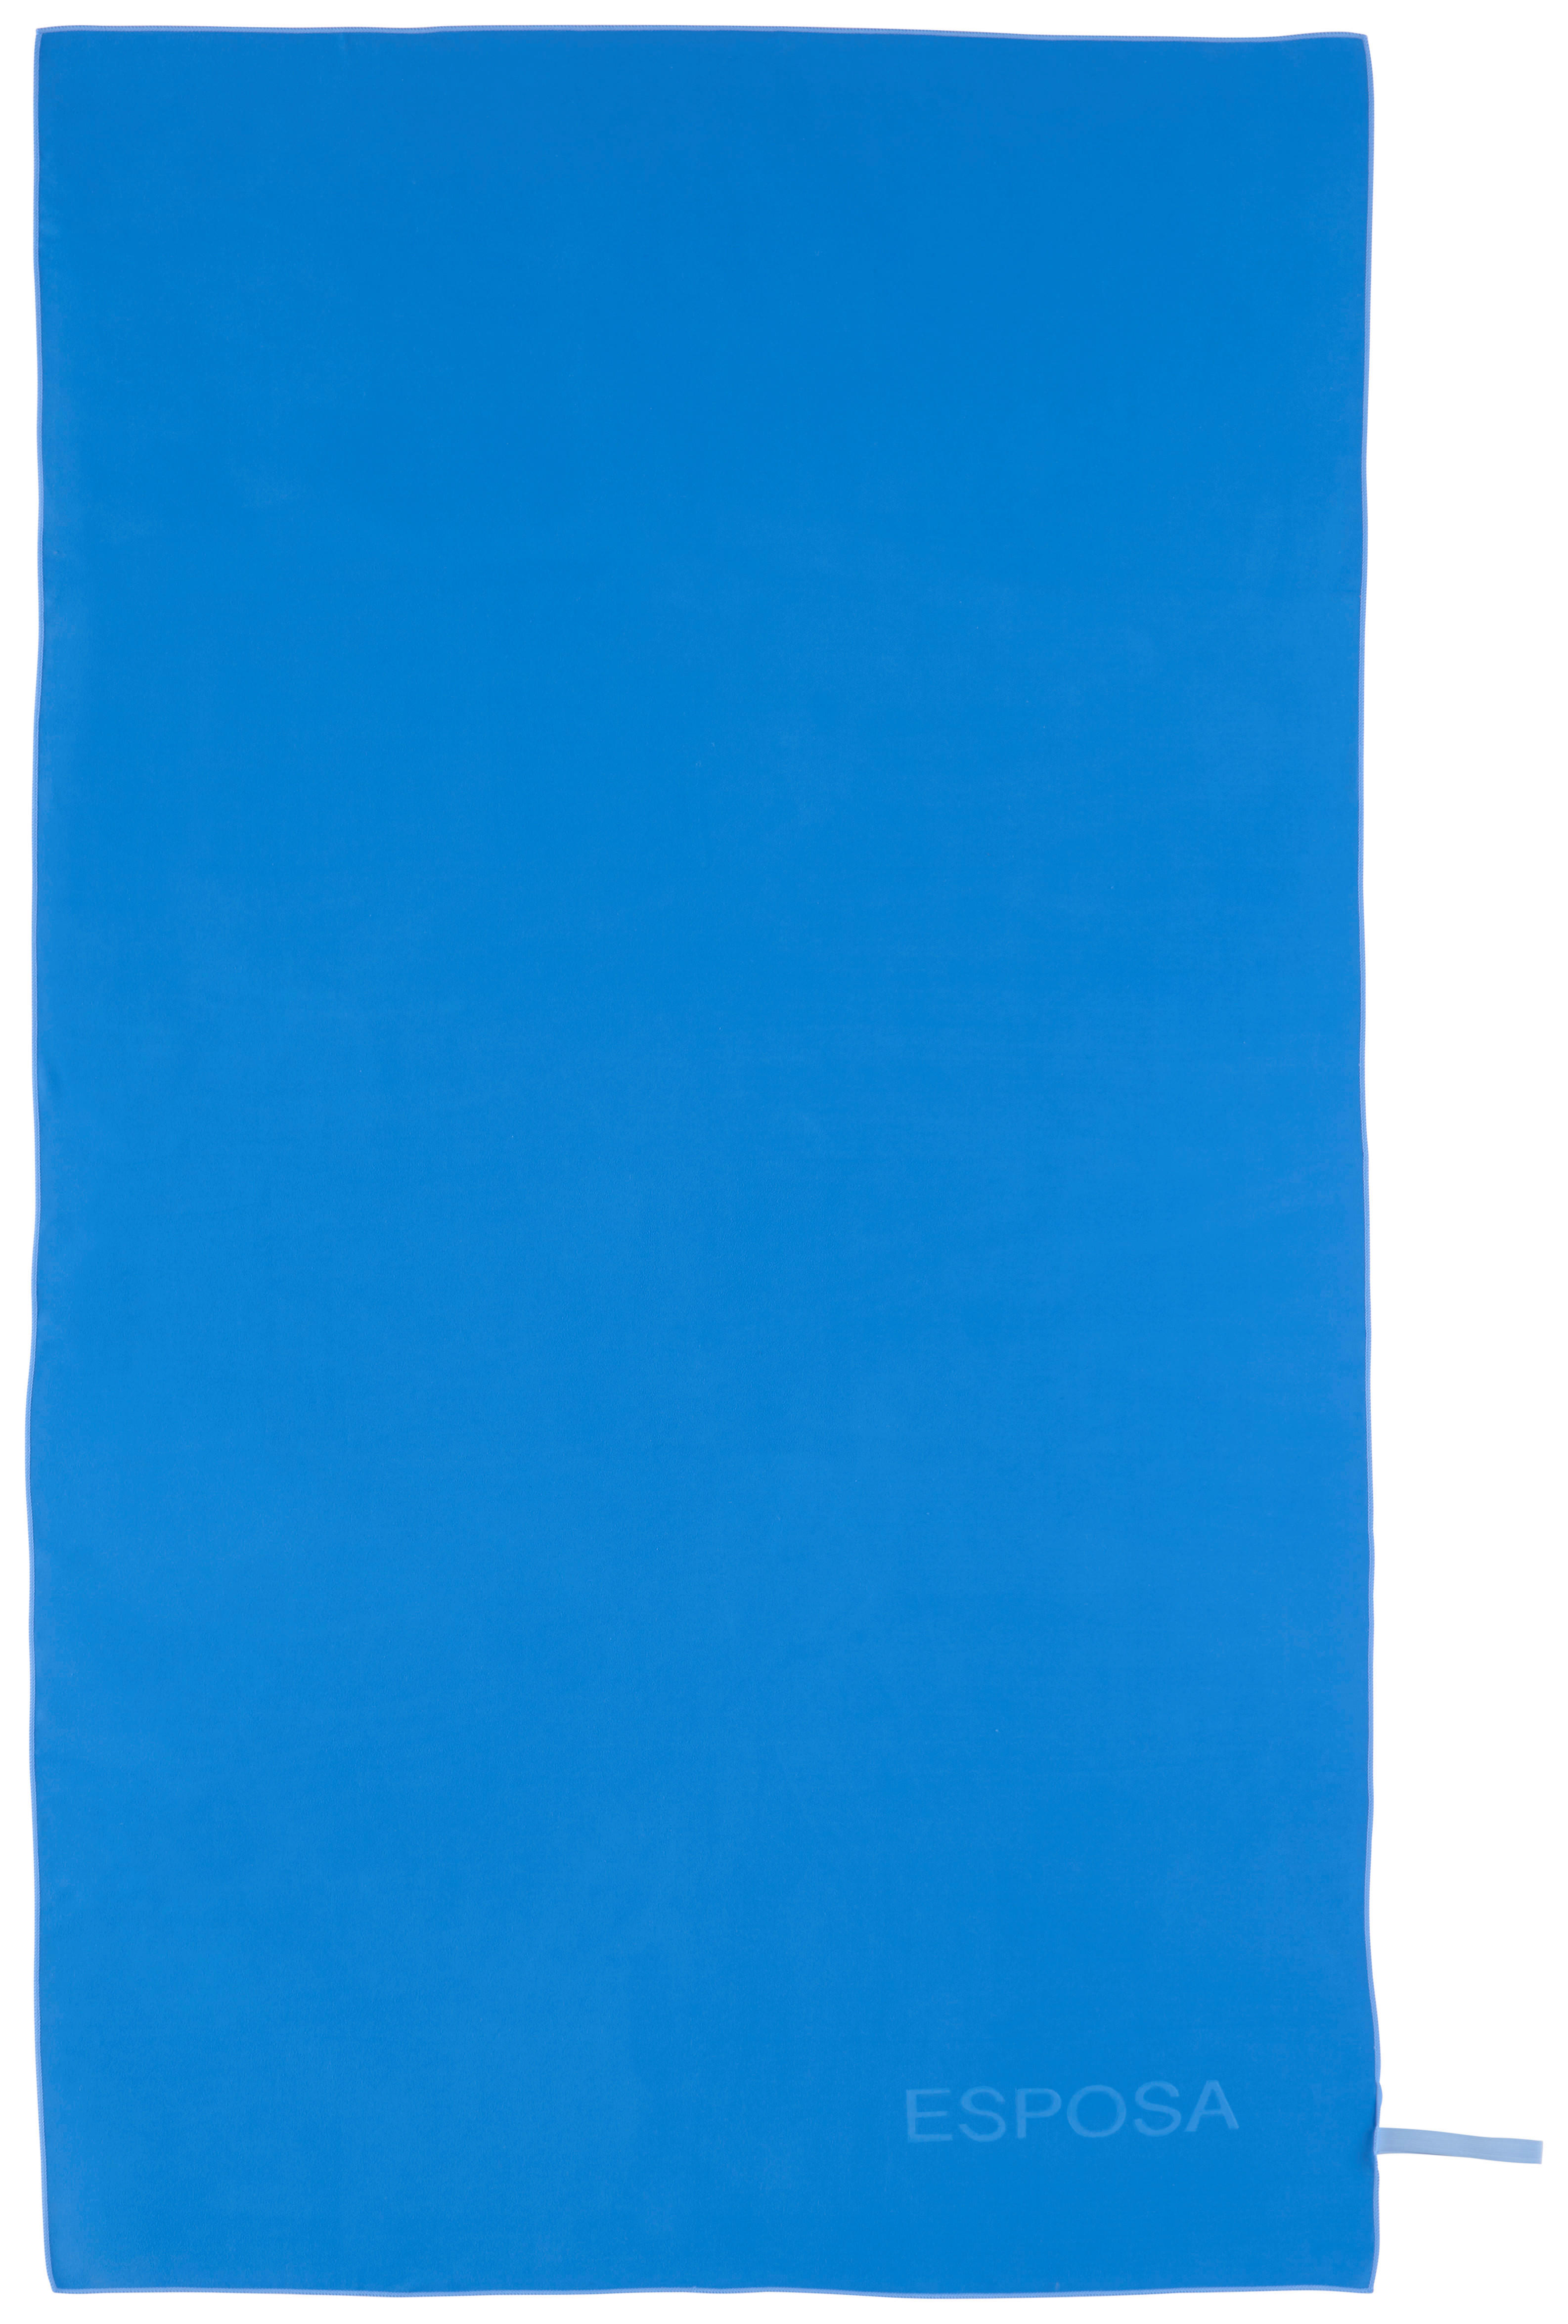 STRANDTUCH Florida 70/140 cm  - Blau, KONVENTIONELL, Textil (70/140cm) - Esposa